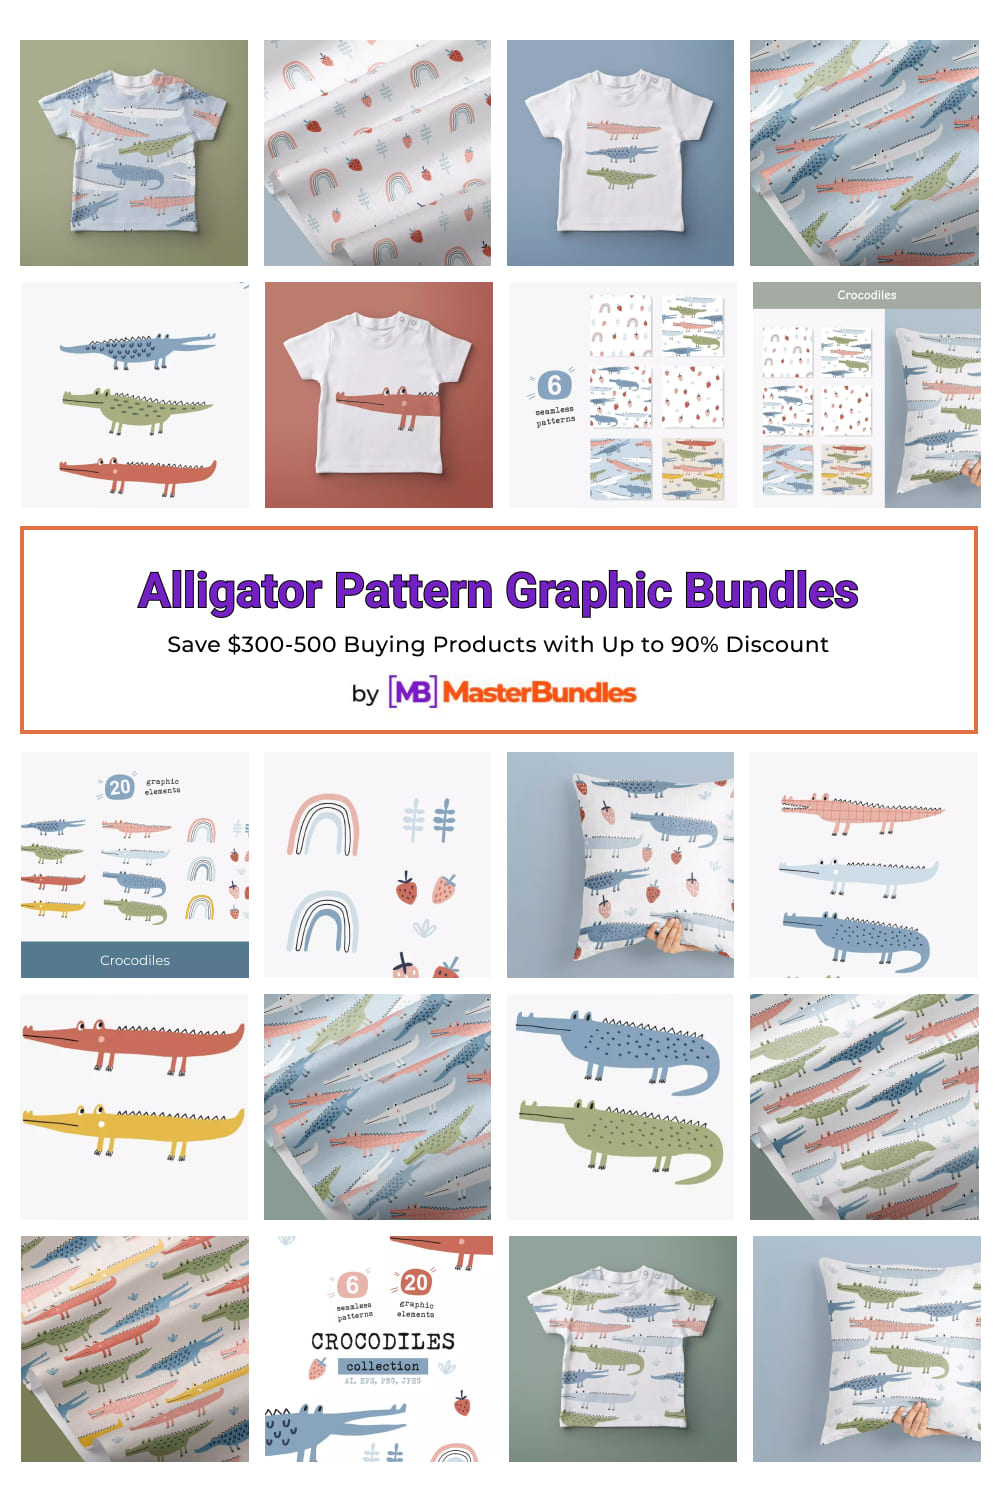 Alligator Pattern Graphic Bundles for Pinterest.